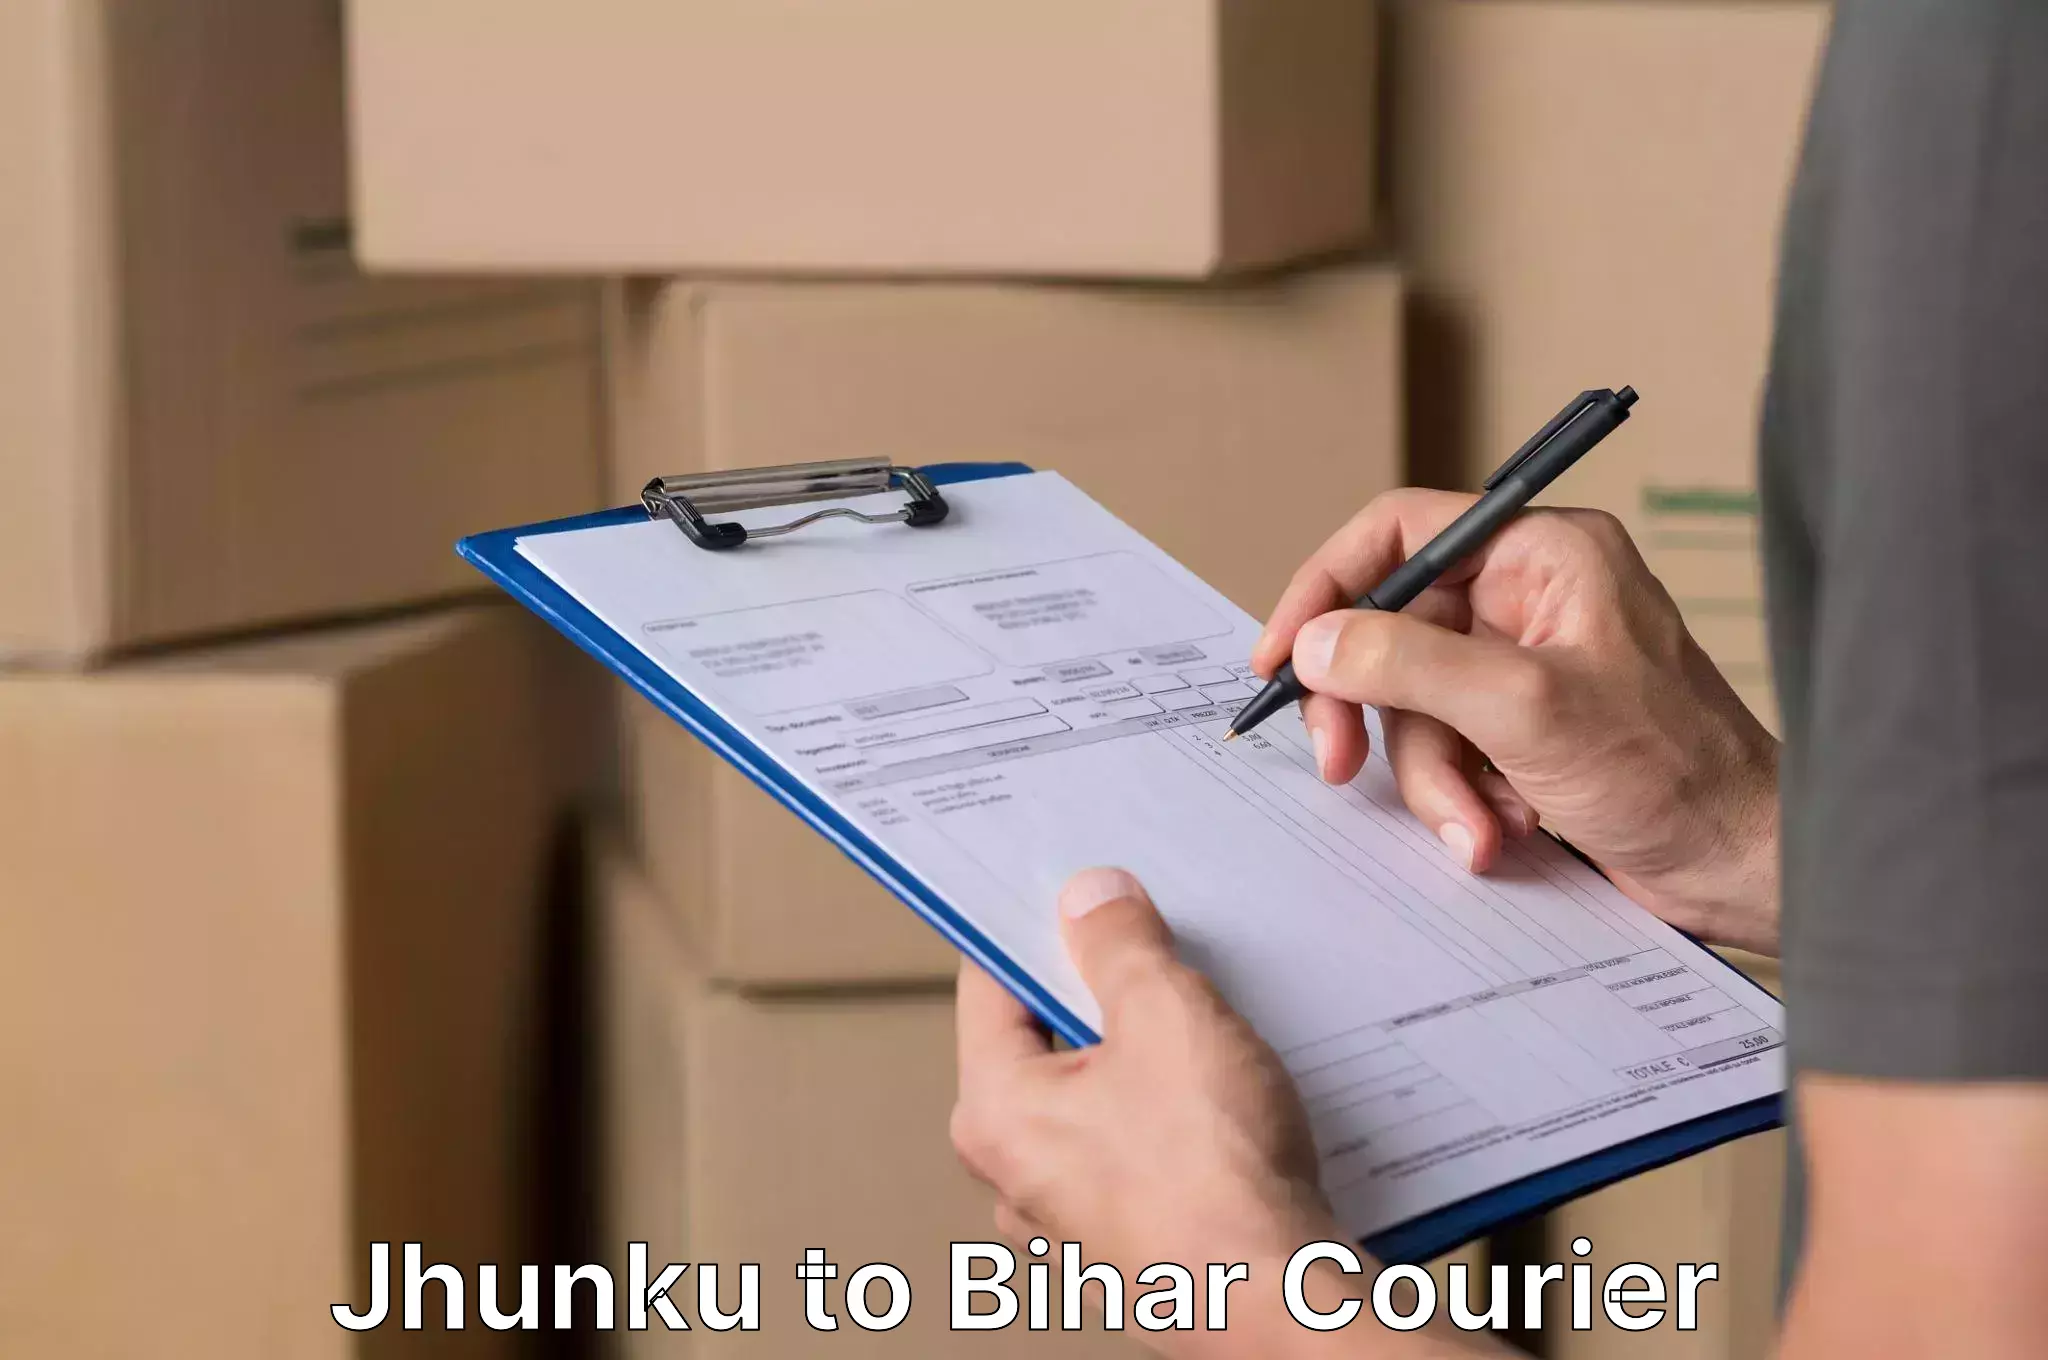 Furniture moving experts Jhunku to Bihar